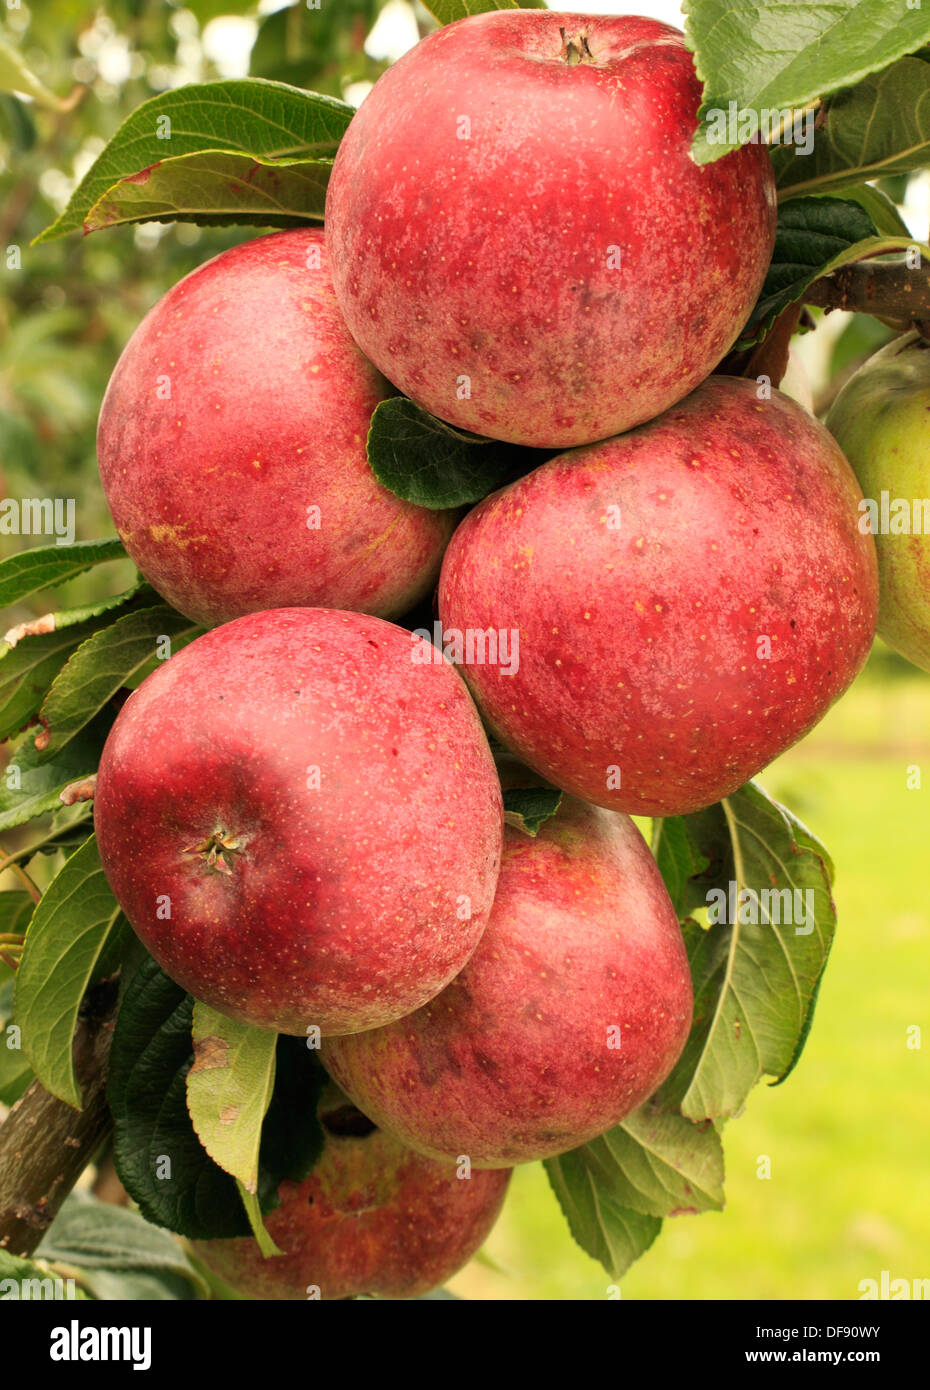 Apple, Flüsse St. Martins, Sorte wächst am Baum, Obst, rote Äpfel England UK Stockfoto